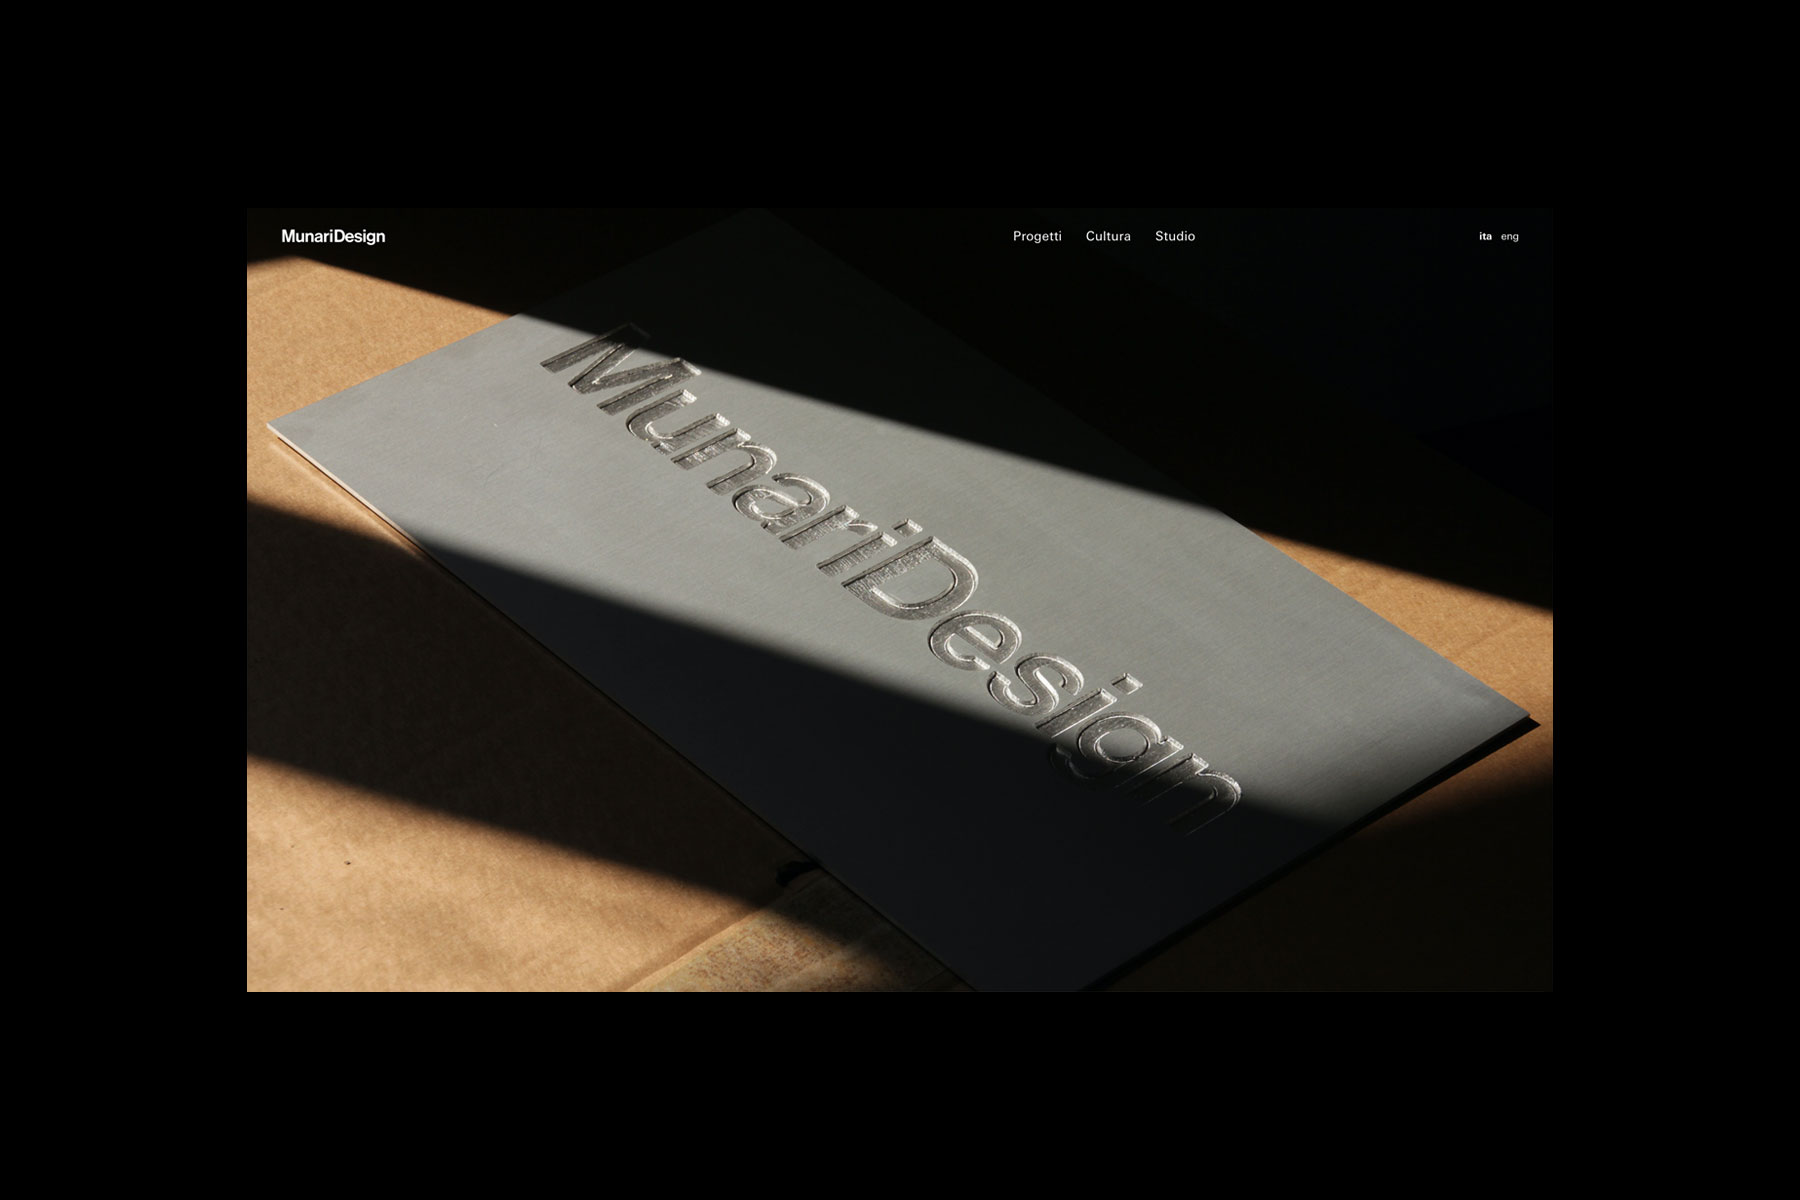 munari design website